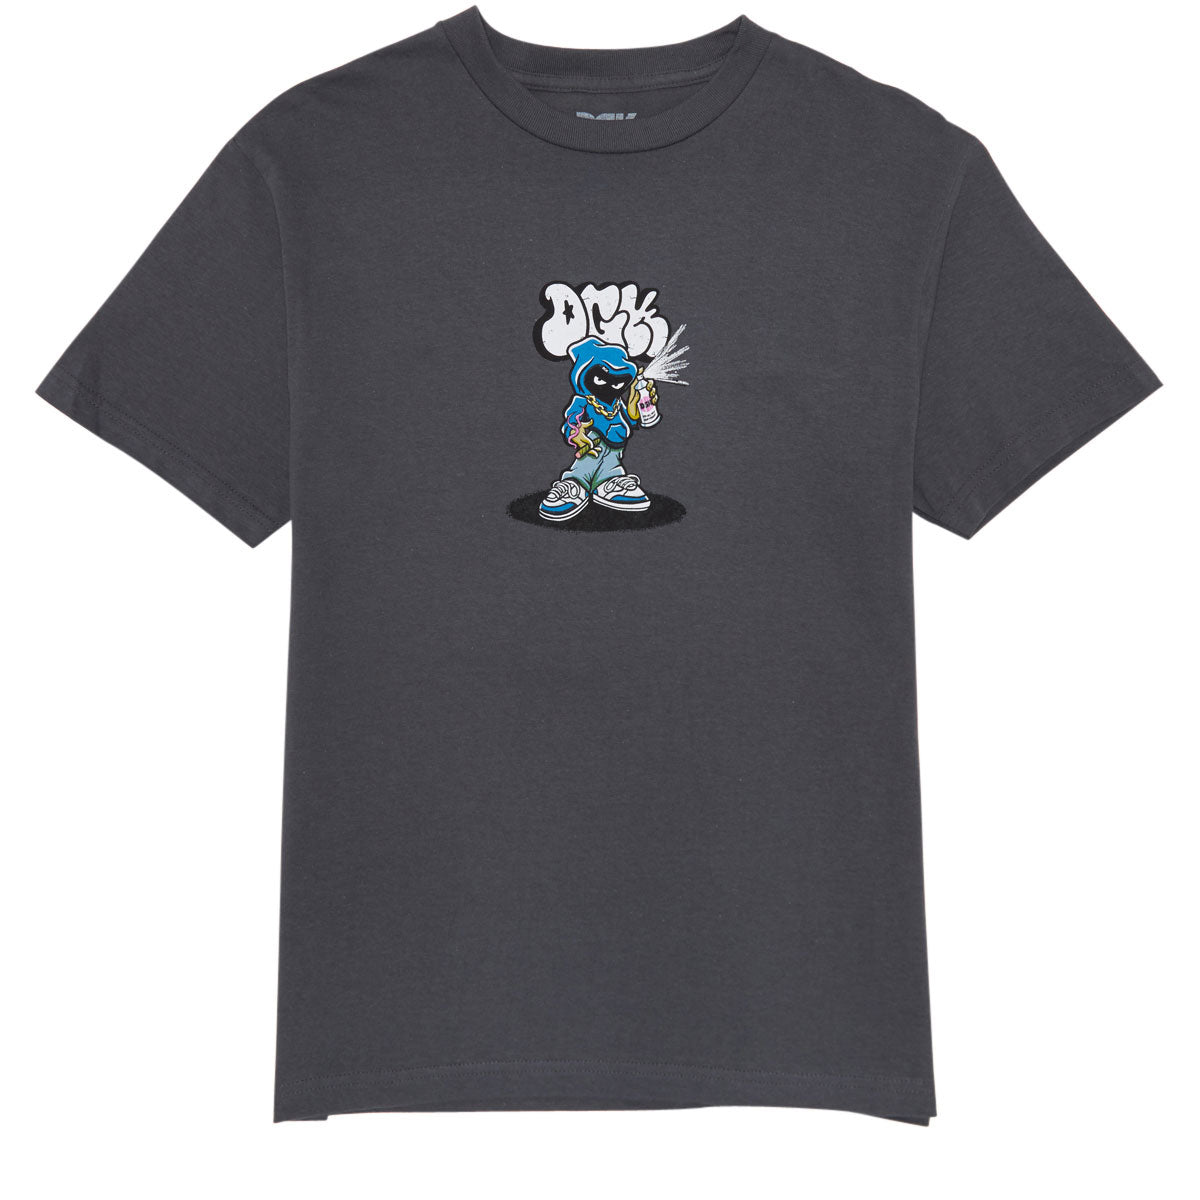 DGK Menace T-Shirt - Charcoal image 1